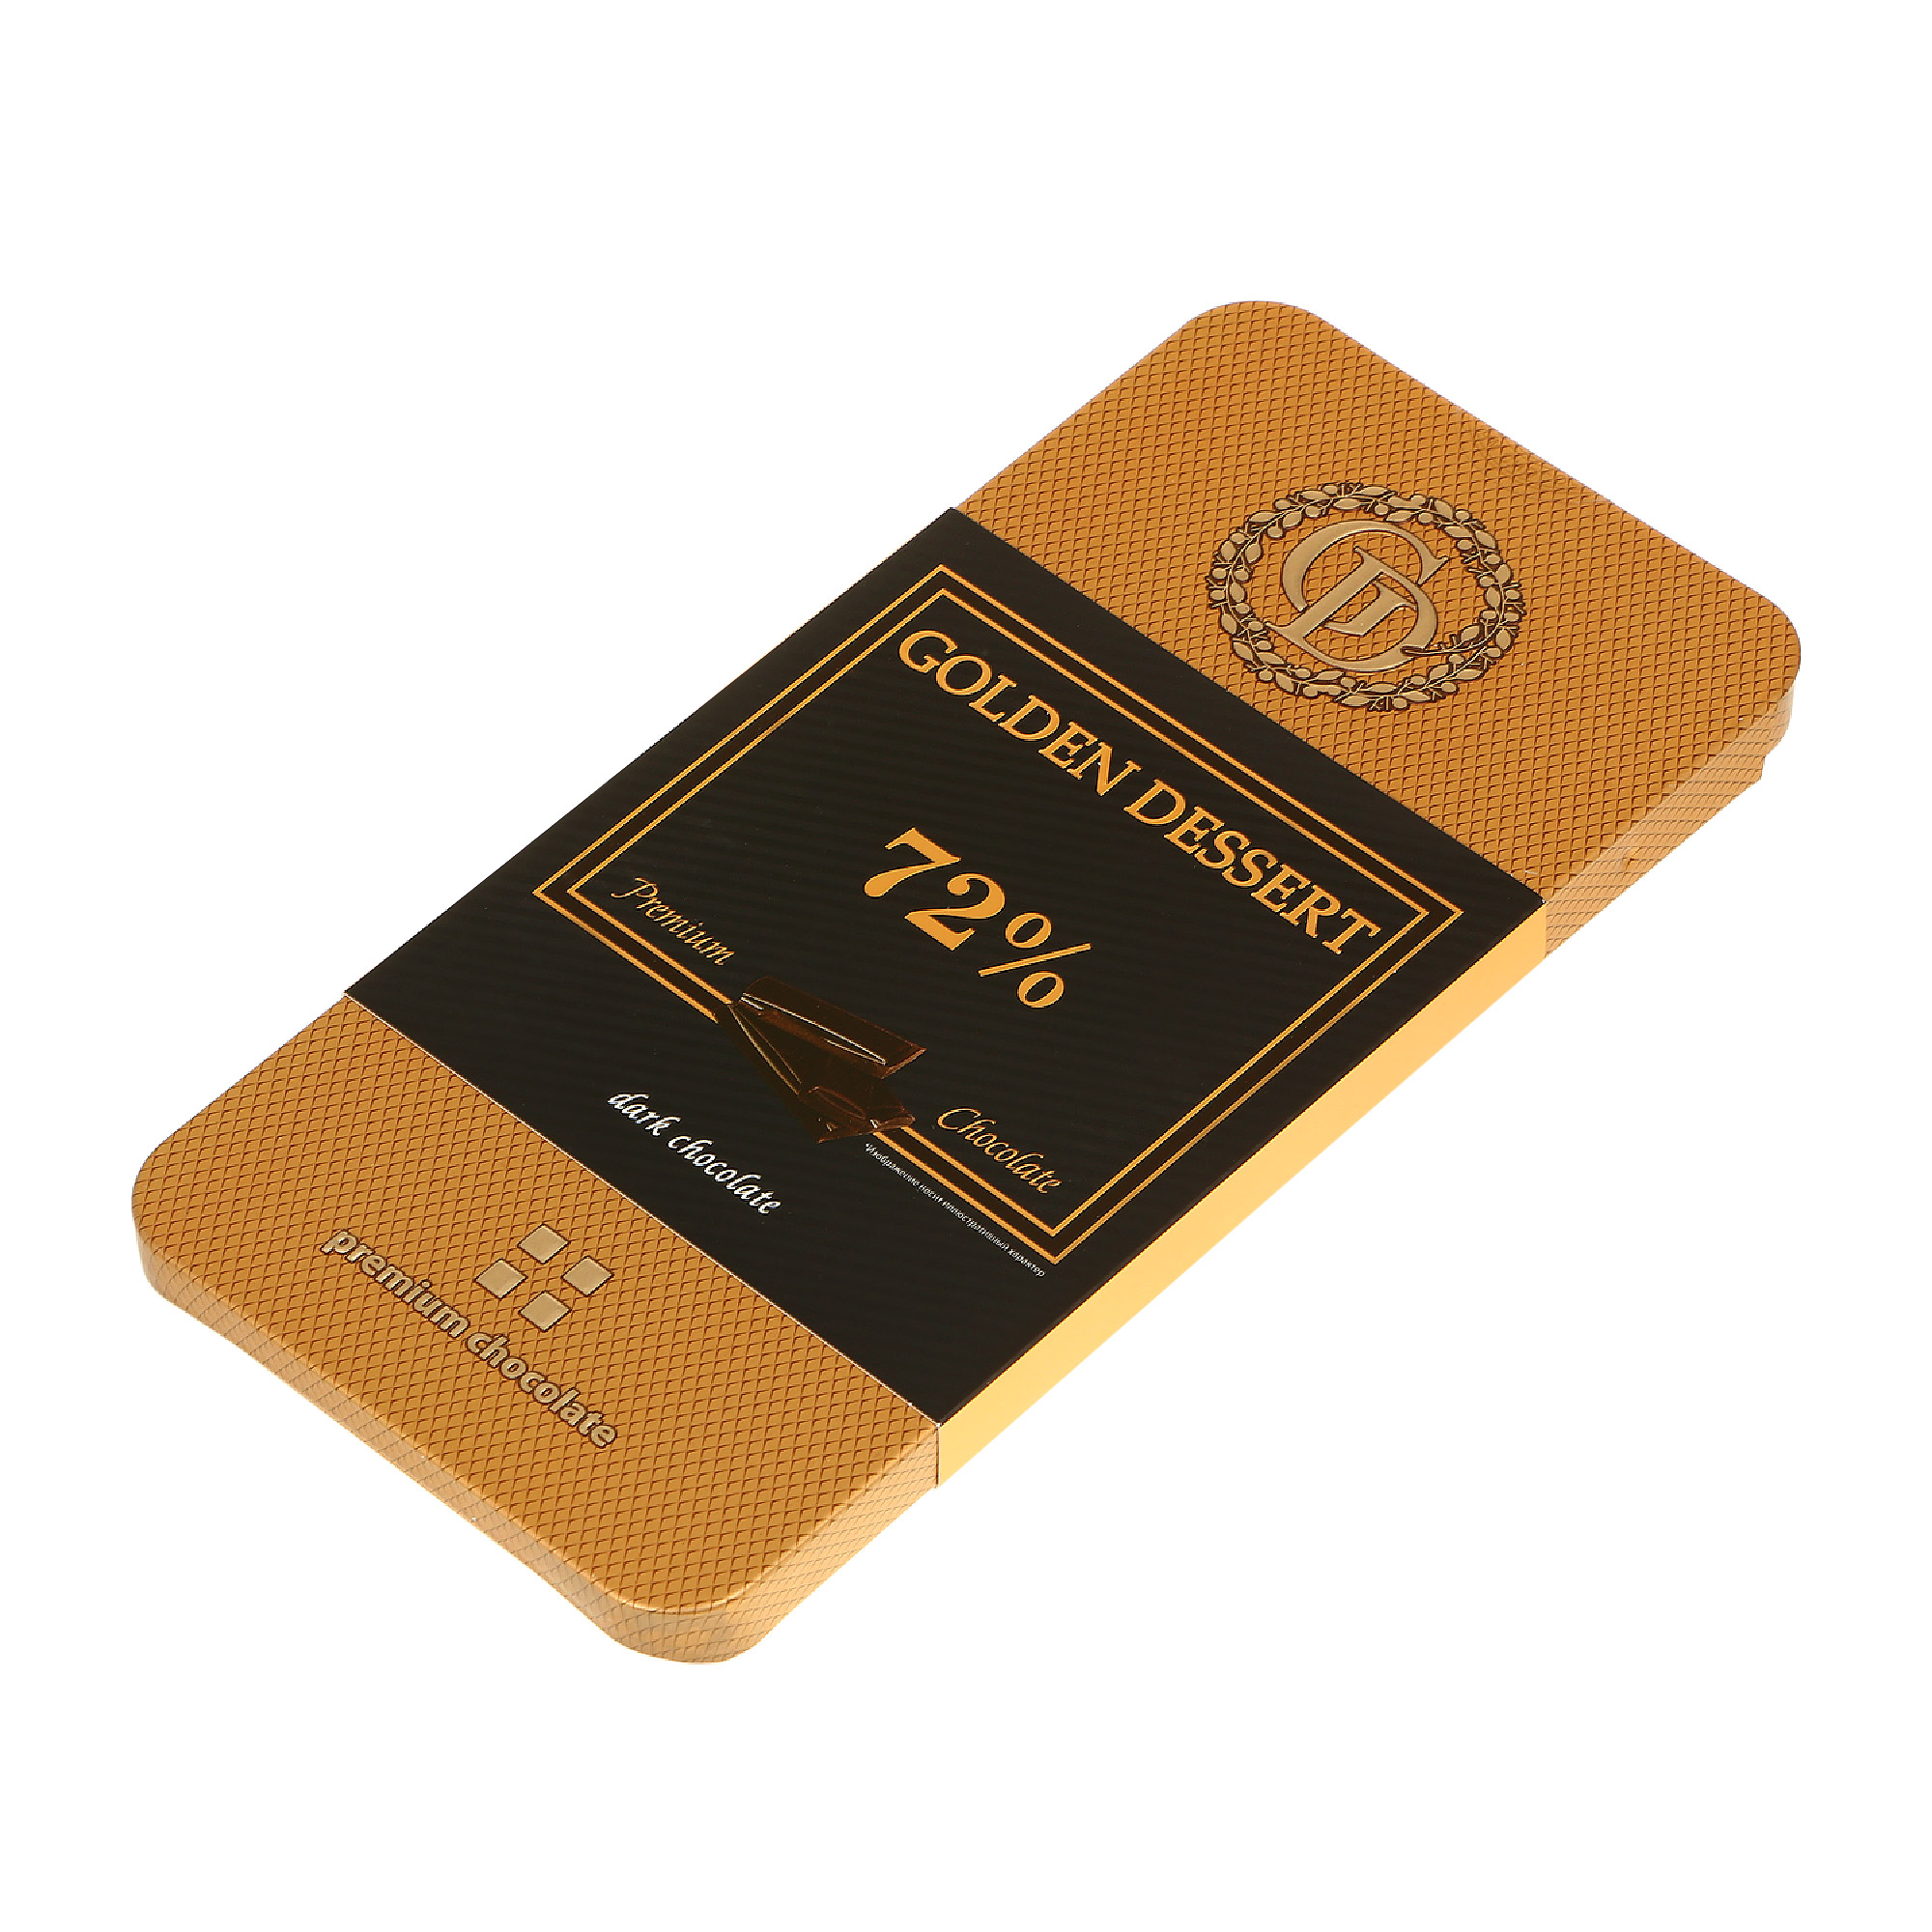 Шоколад горький GOLDEN DESSERT 72% 100 г шоколад rioba порционный горький 72% какао 800 гр